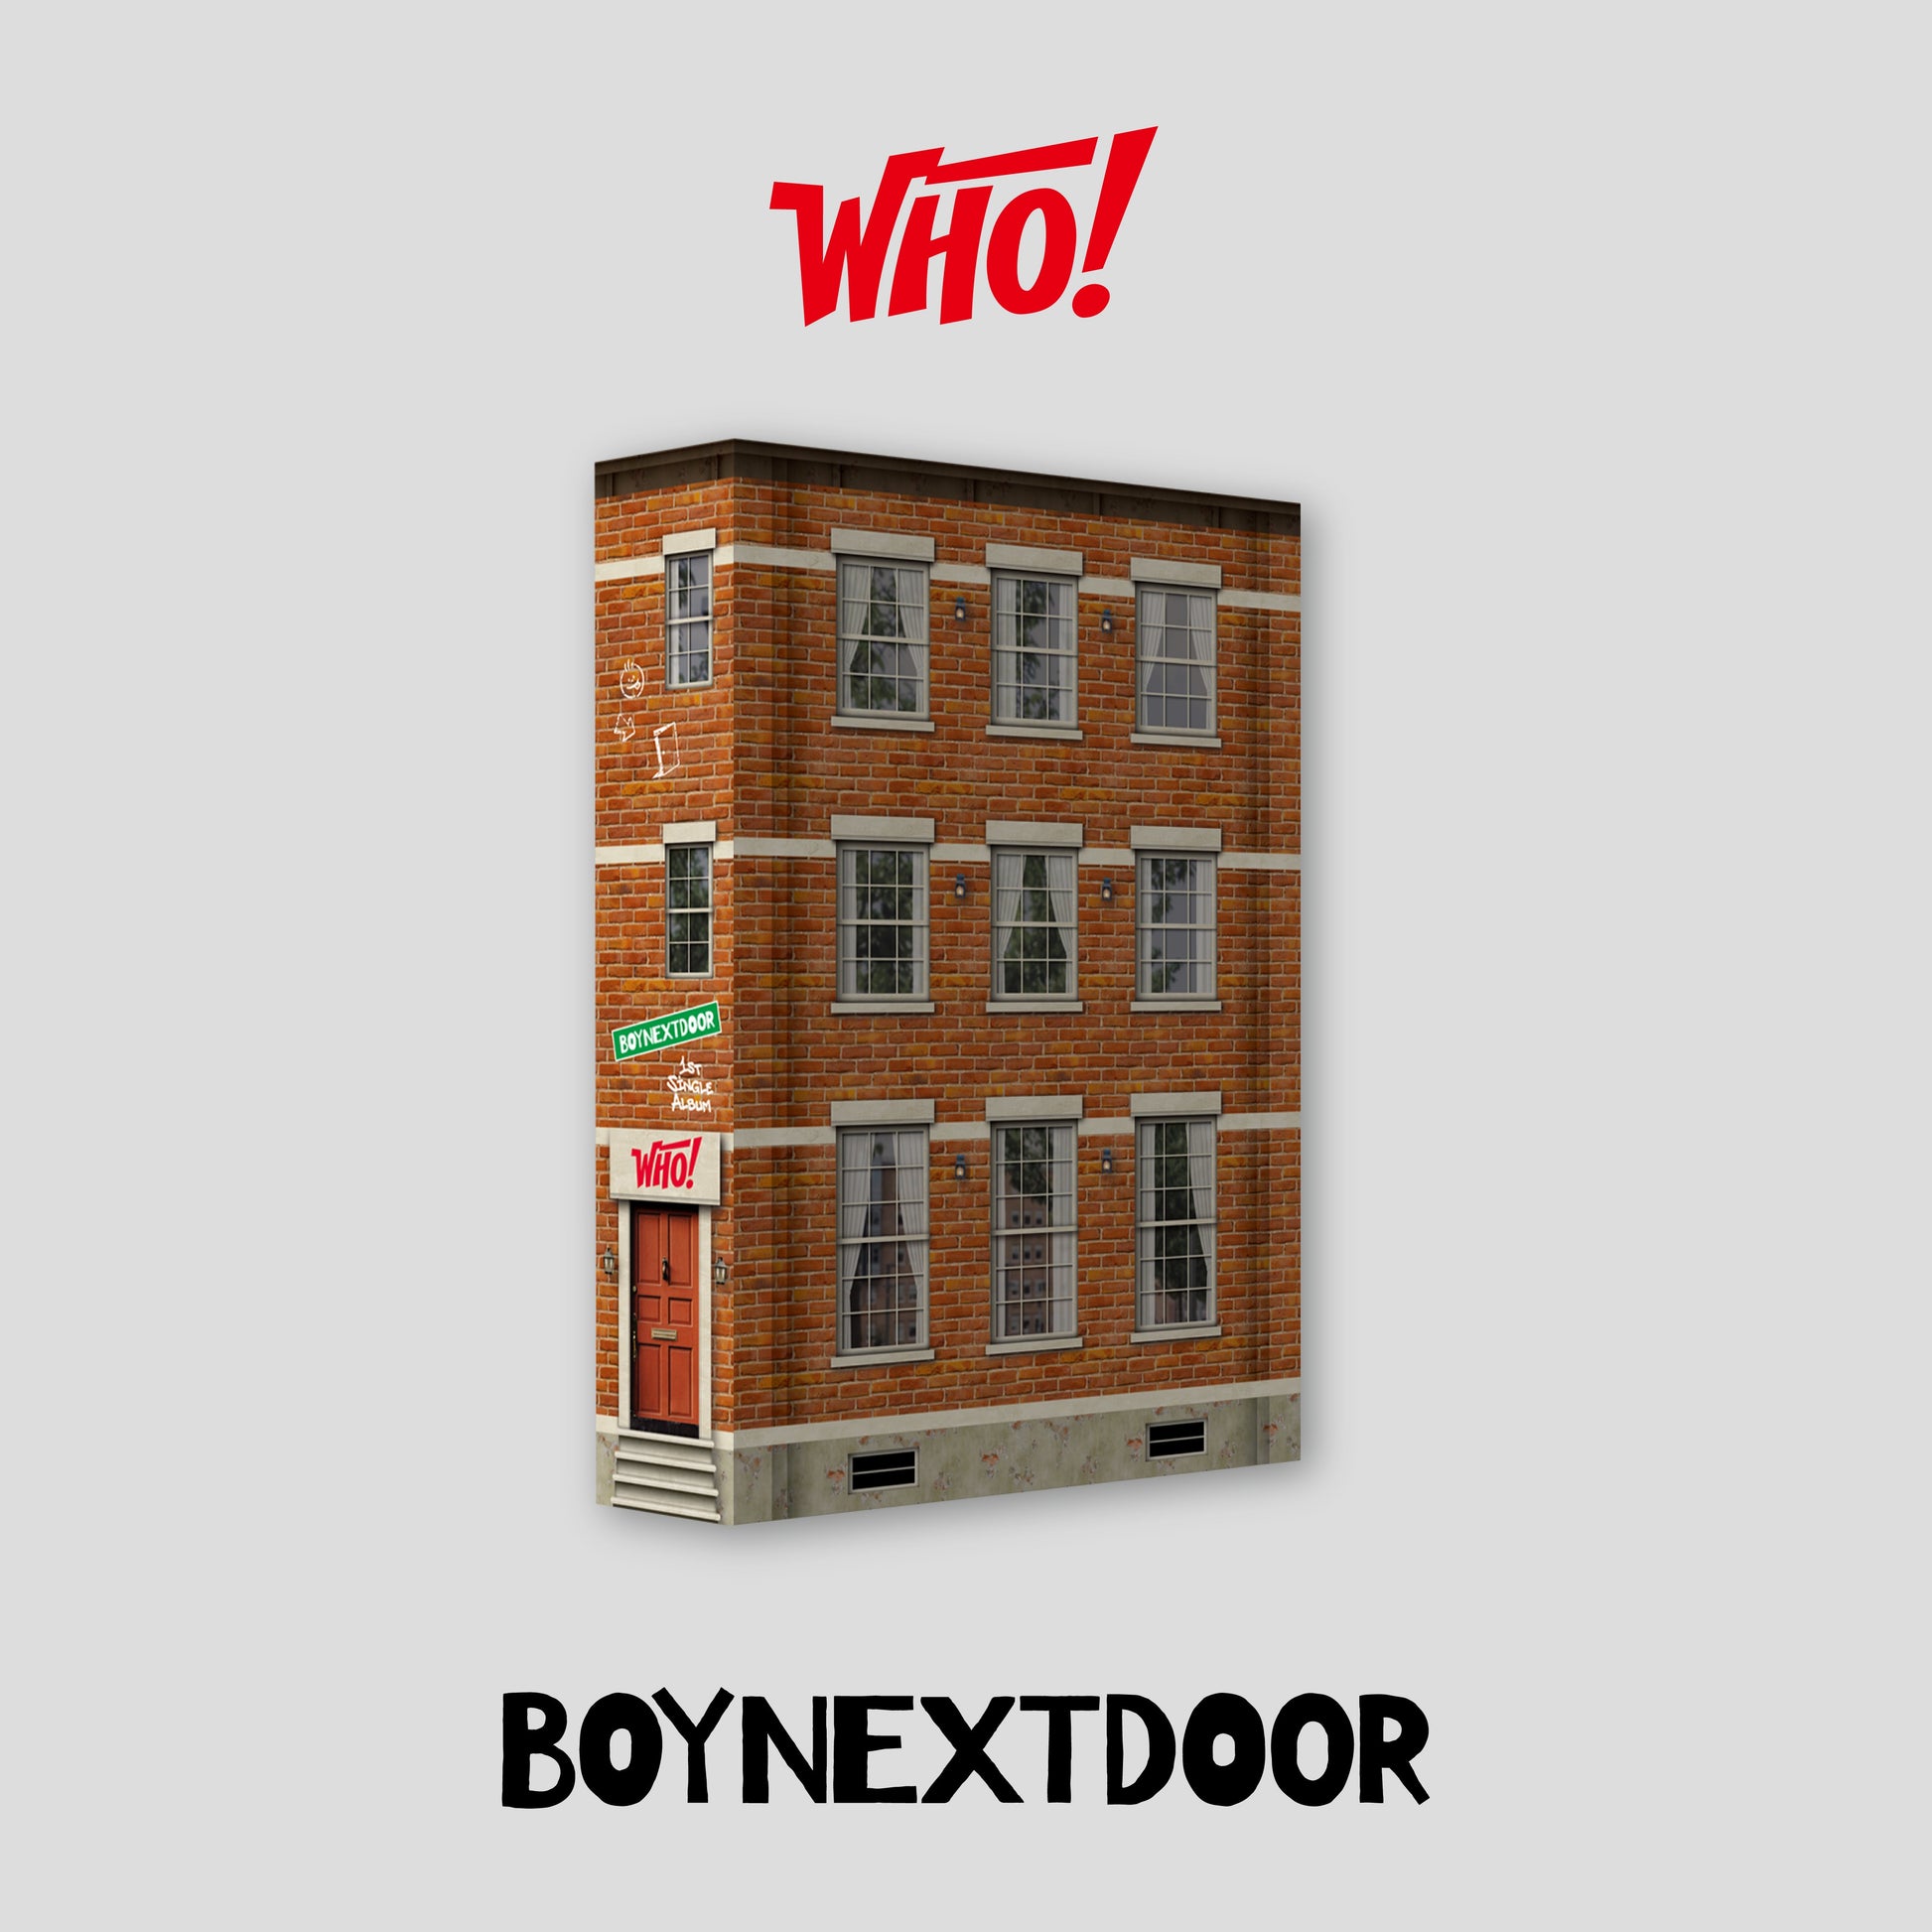 BOYNEXTDOOR 1ST SINGLE ALBUM 'WHO!' WHO VERSION COVER